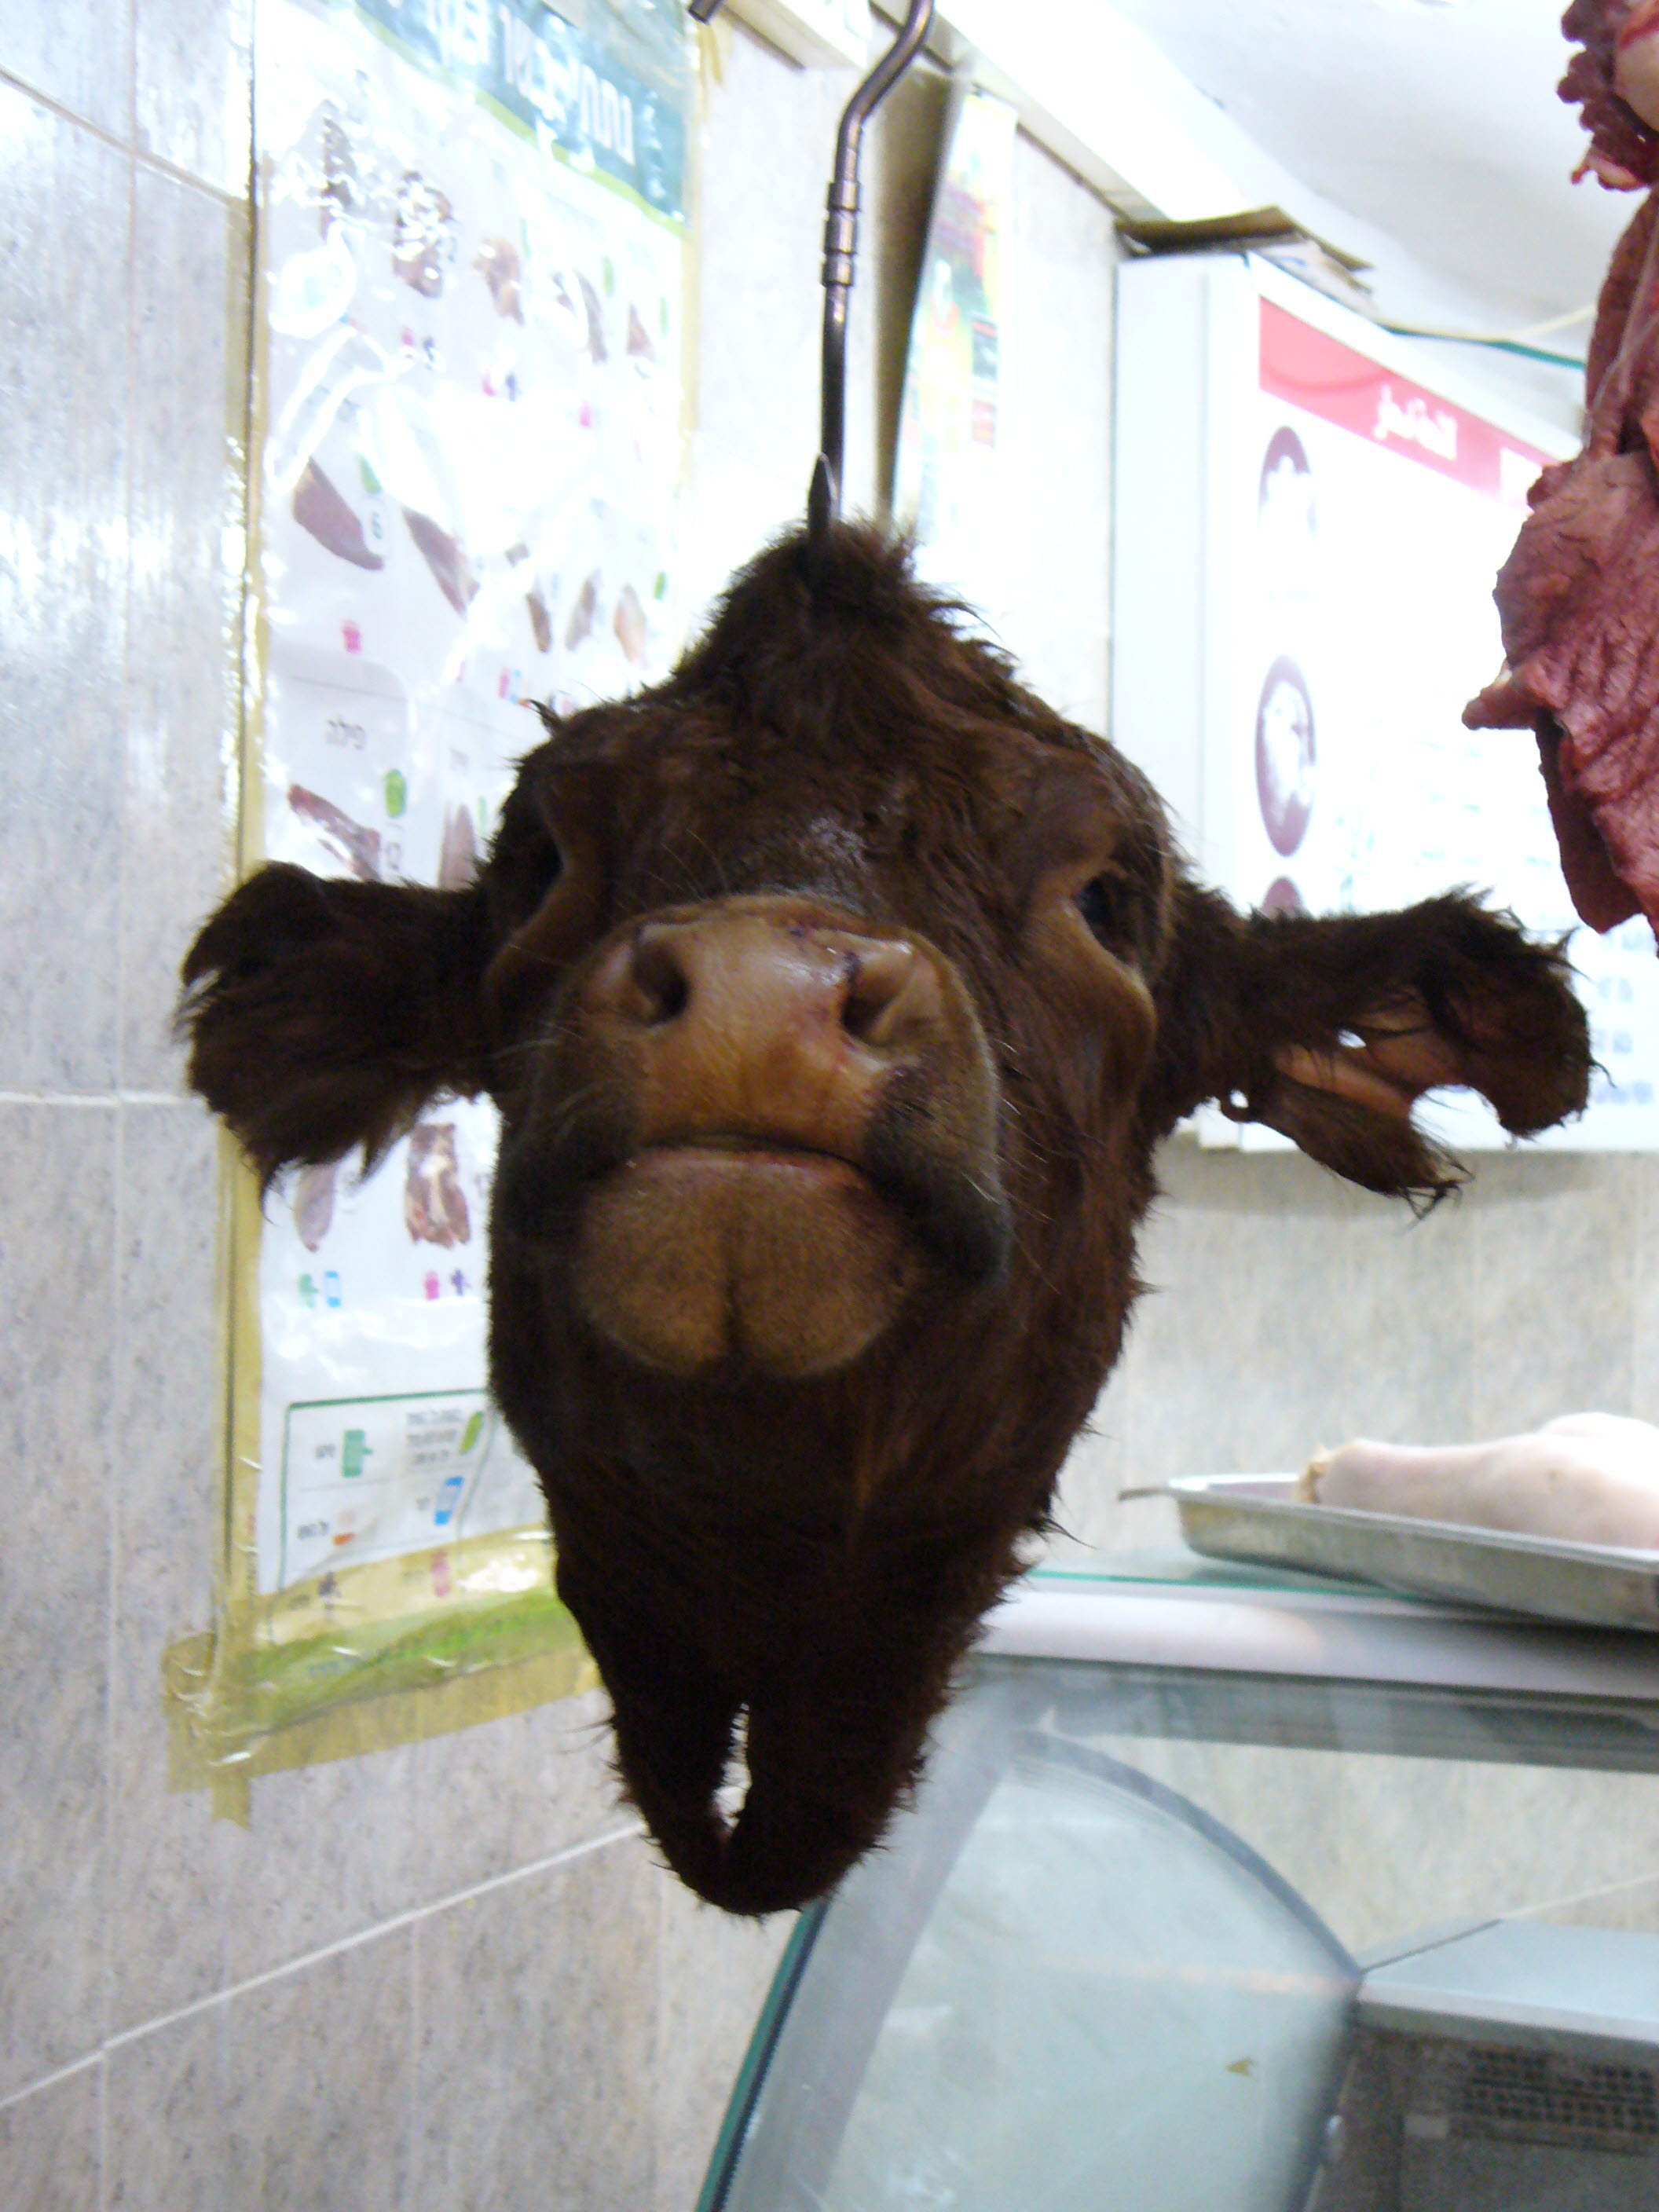 File:Cow's head, butcher shop in Acre, Israel.jpg - Wikimedia Commons